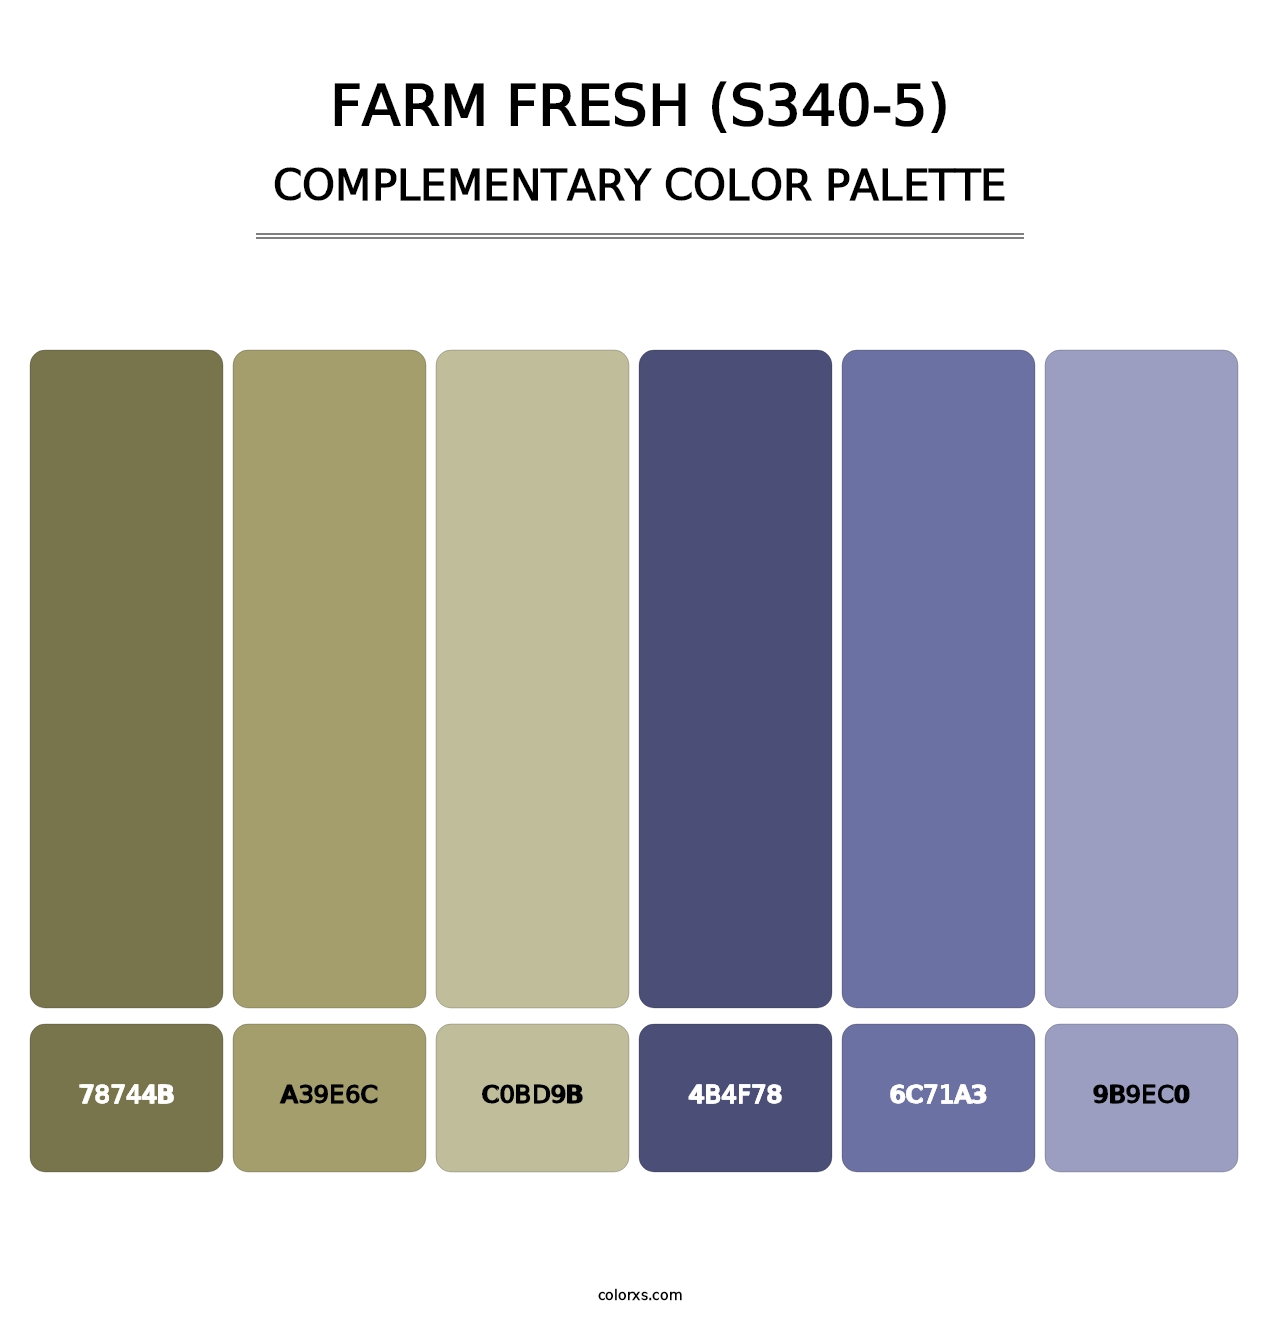 Farm Fresh (S340-5) - Complementary Color Palette